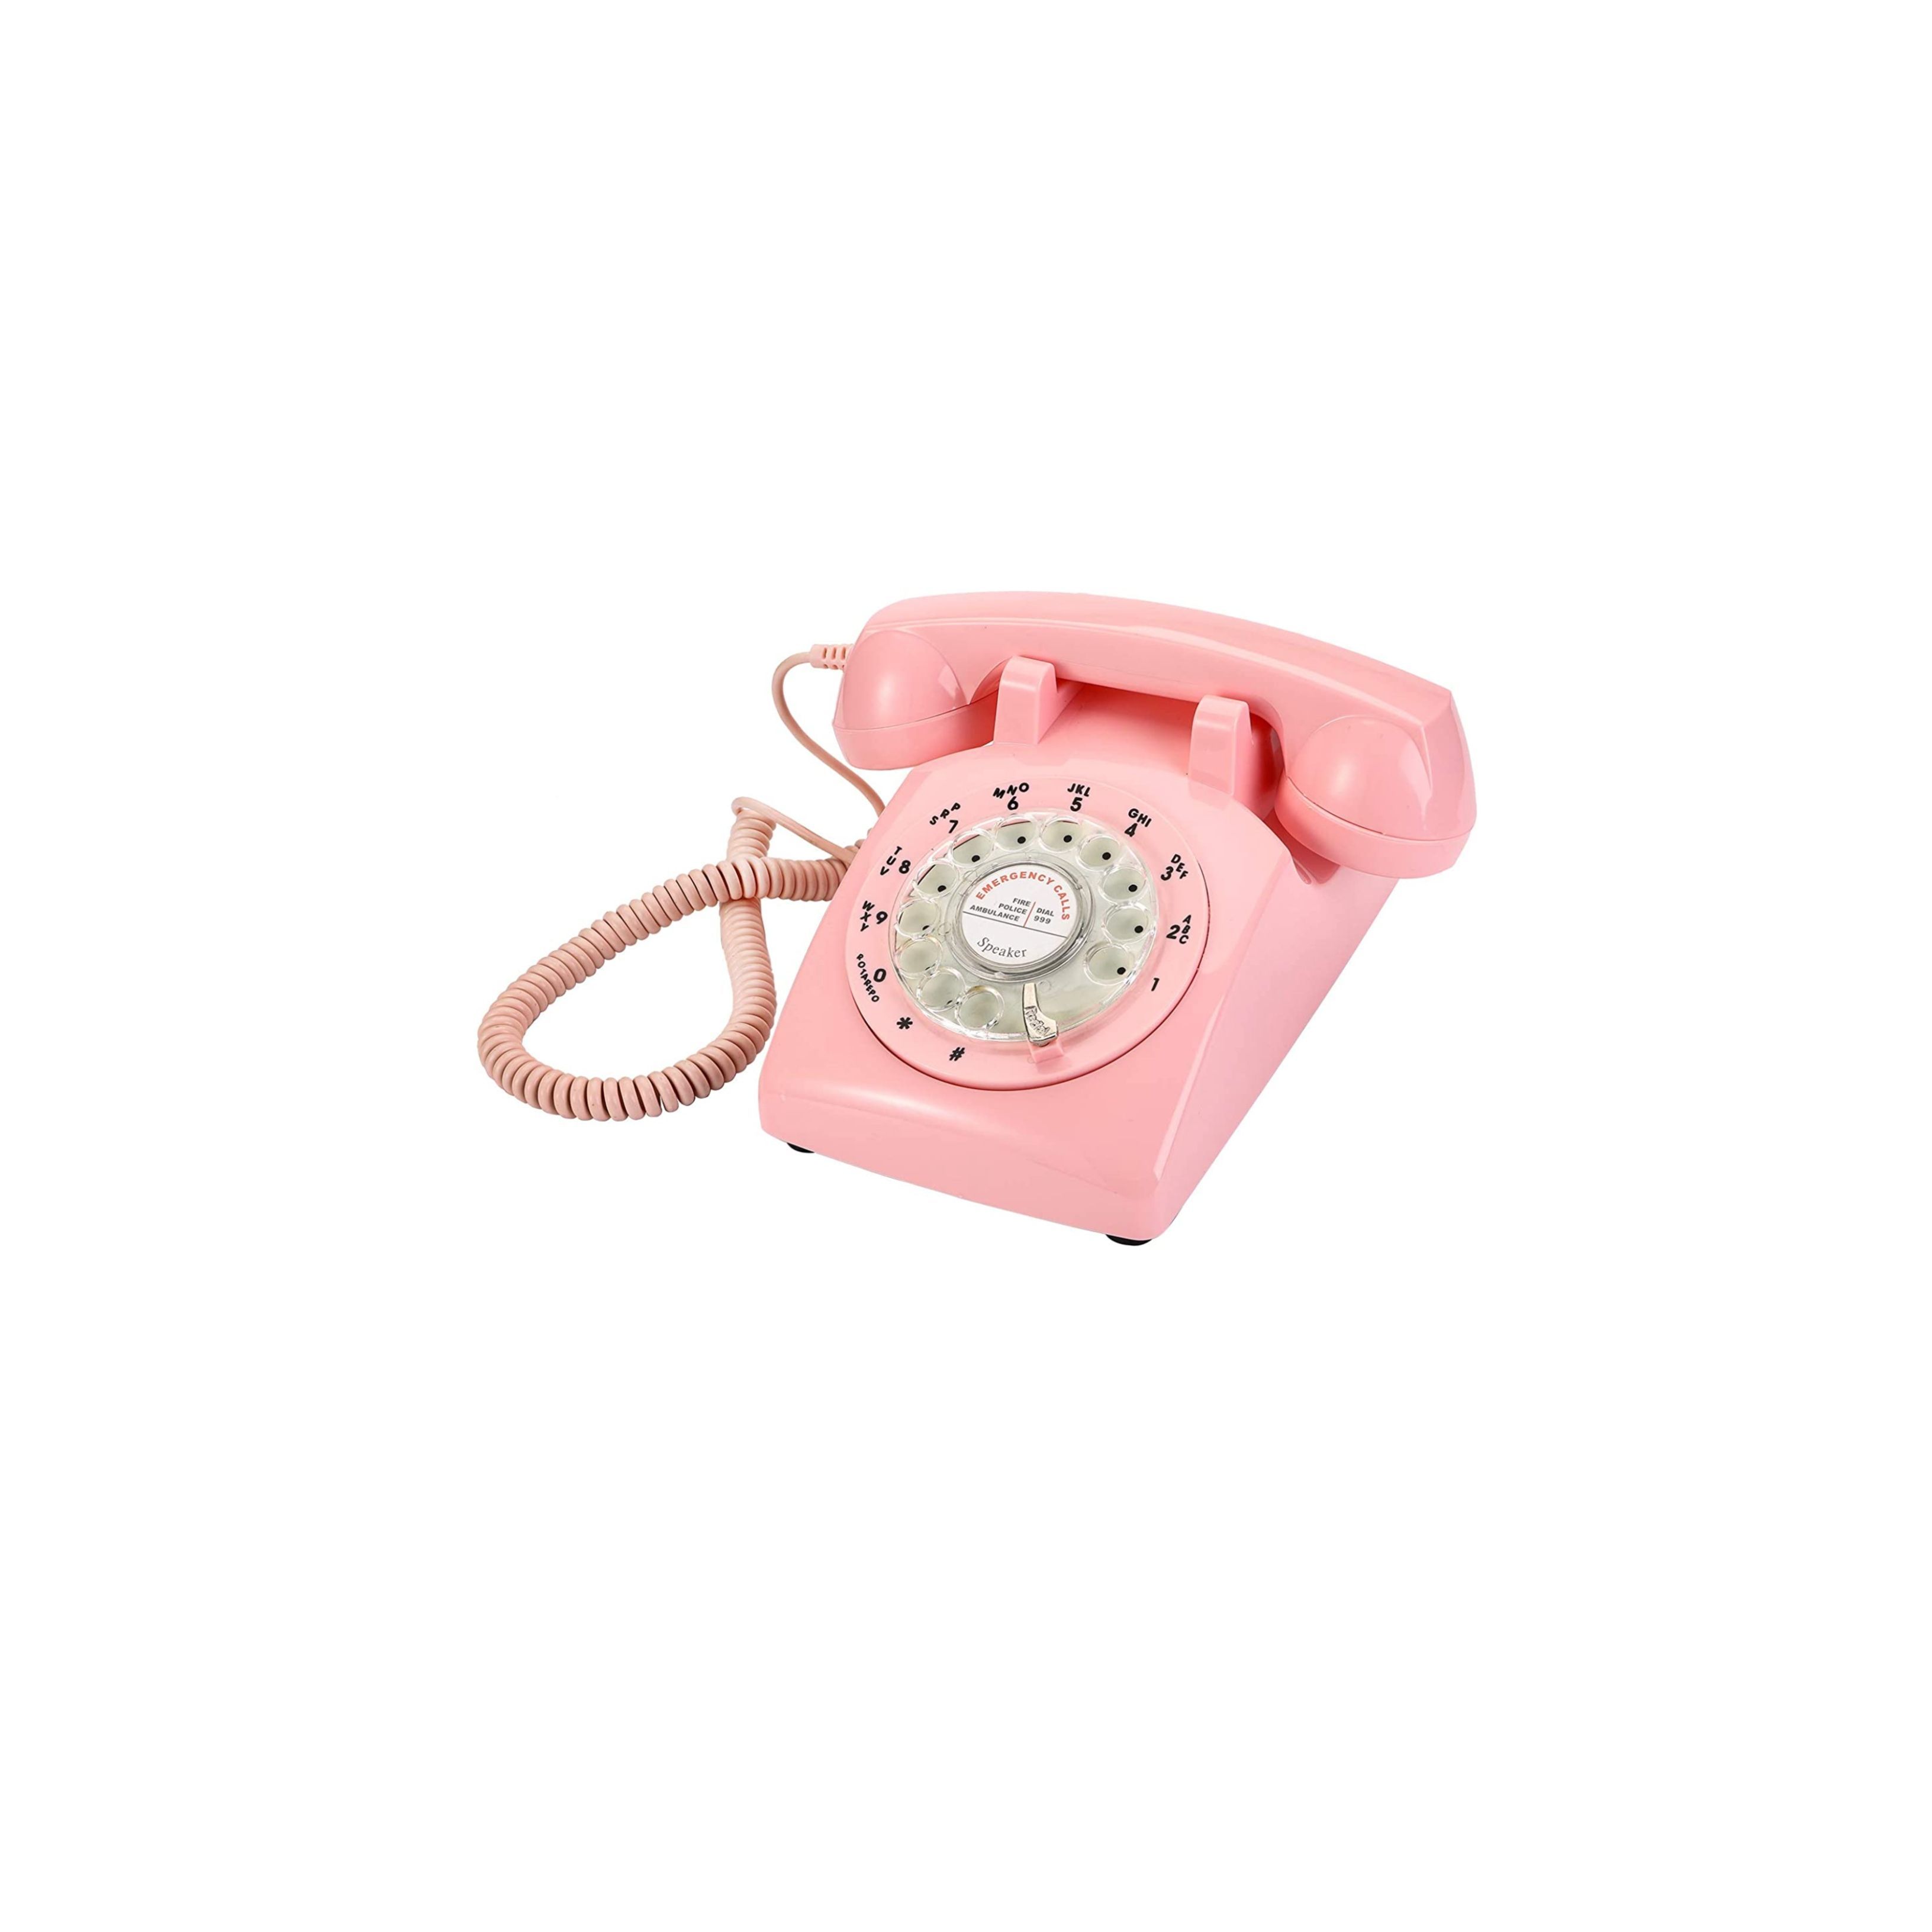 Rotary Dial Telephone